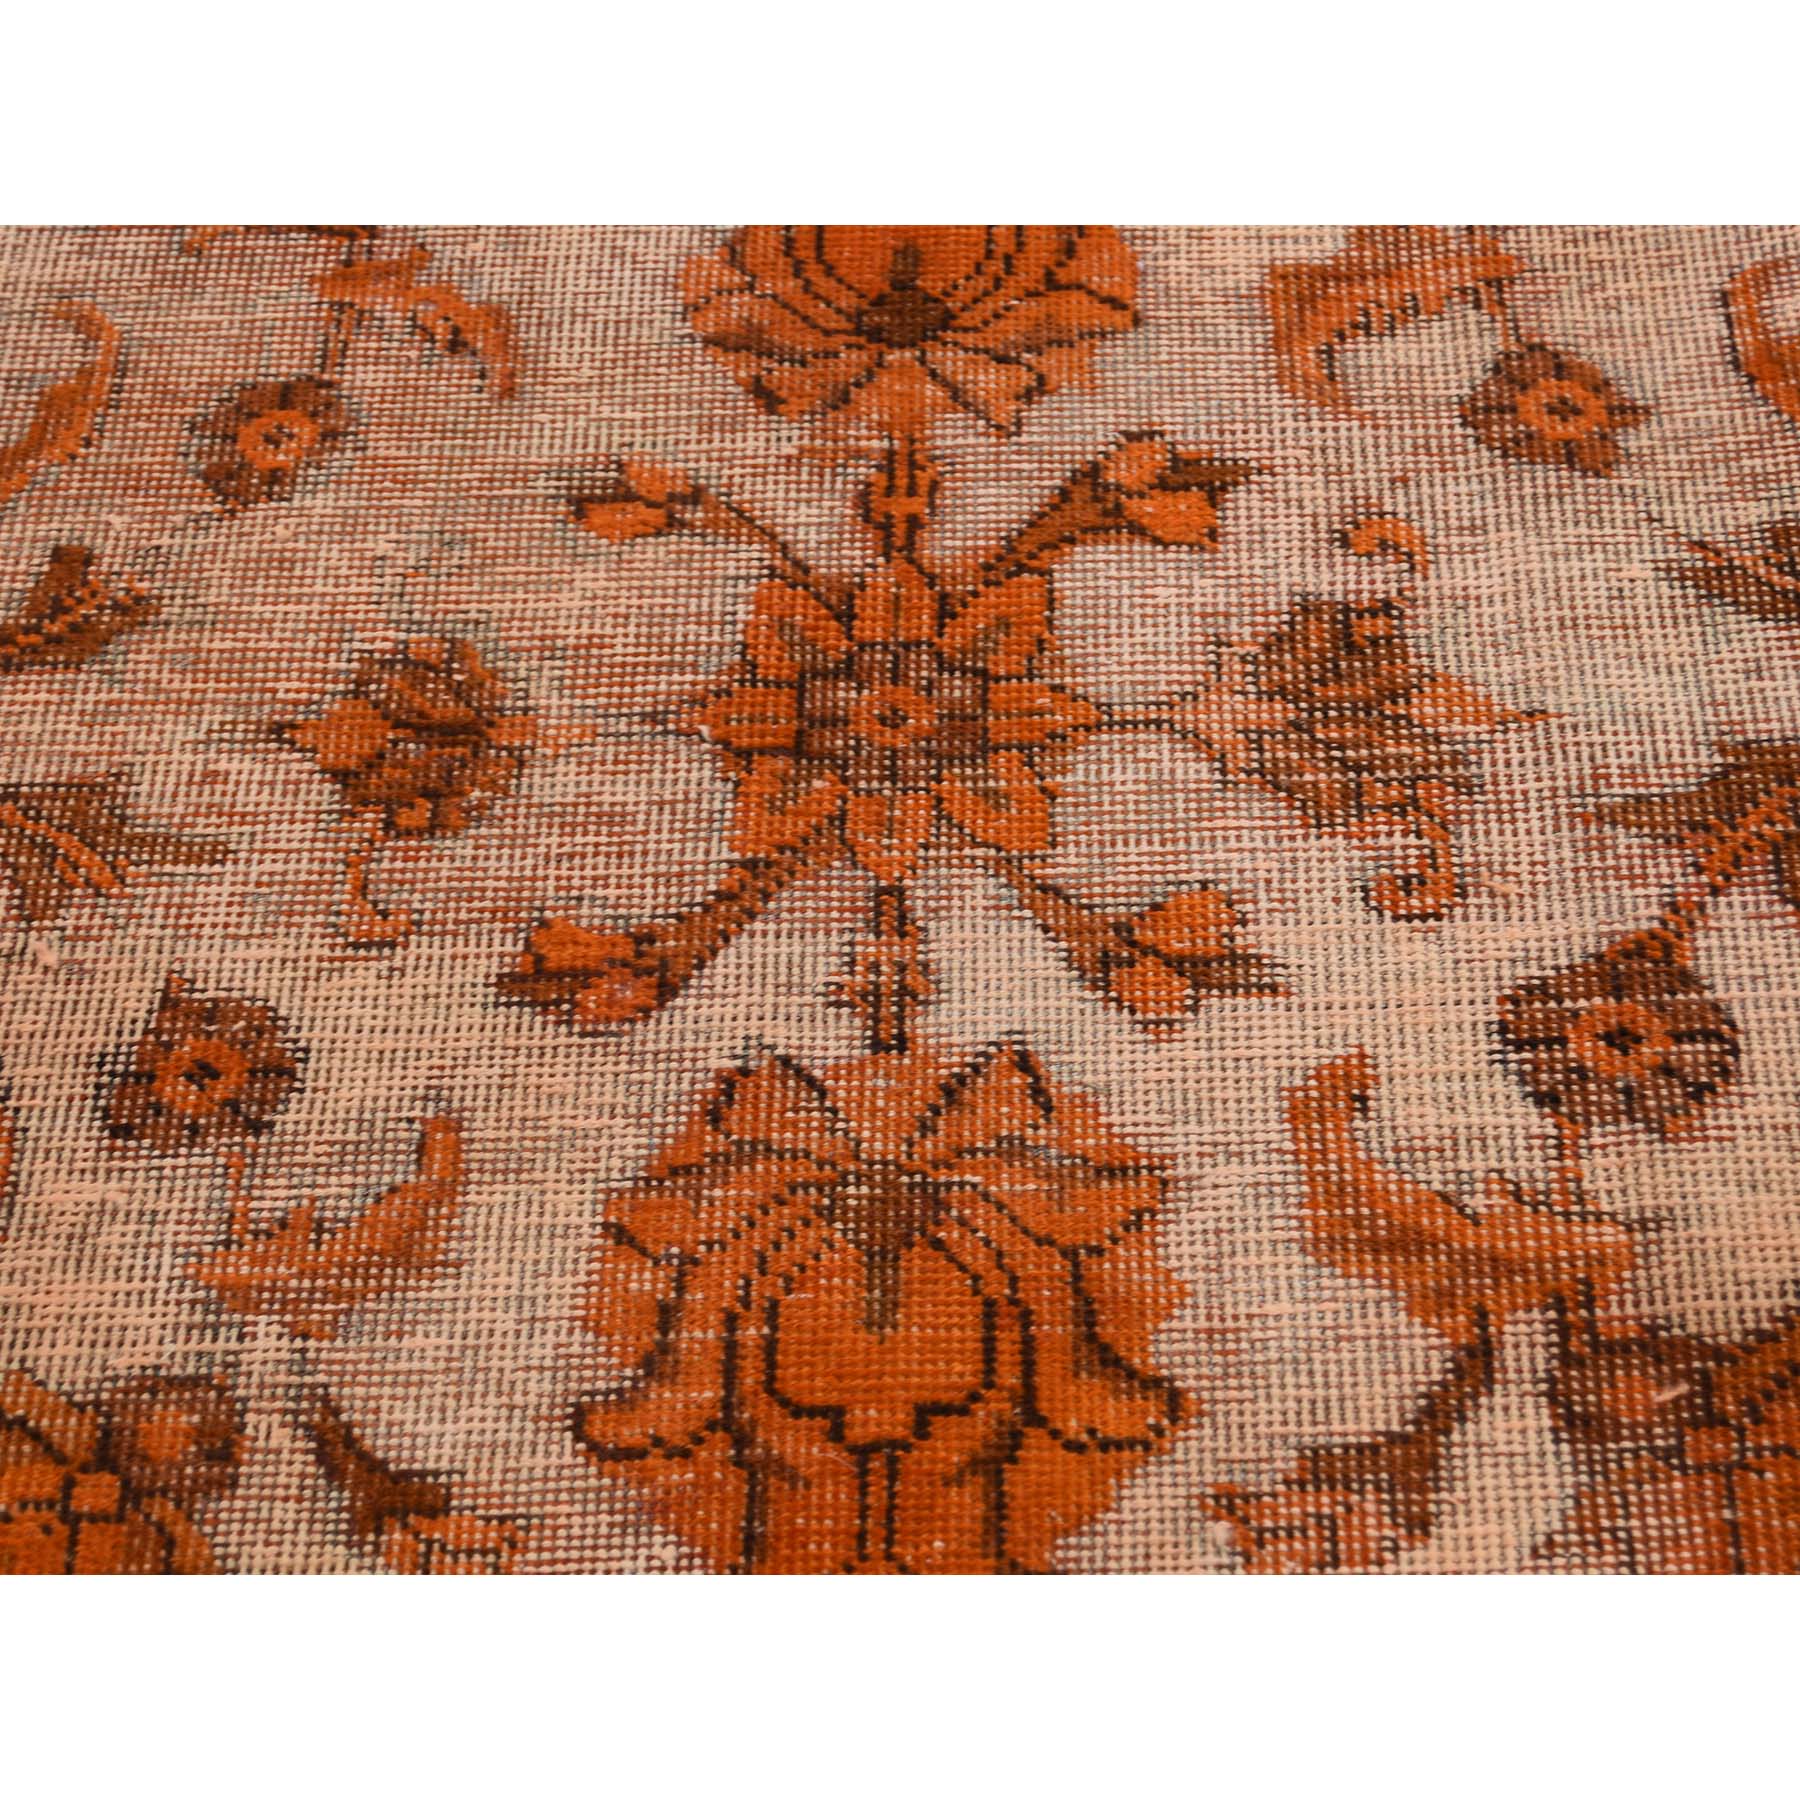 8-1 x10-9  Orange Overdyed Persian Tabriz Barjasta Vintage Hand-Knotted Oriental Rug 